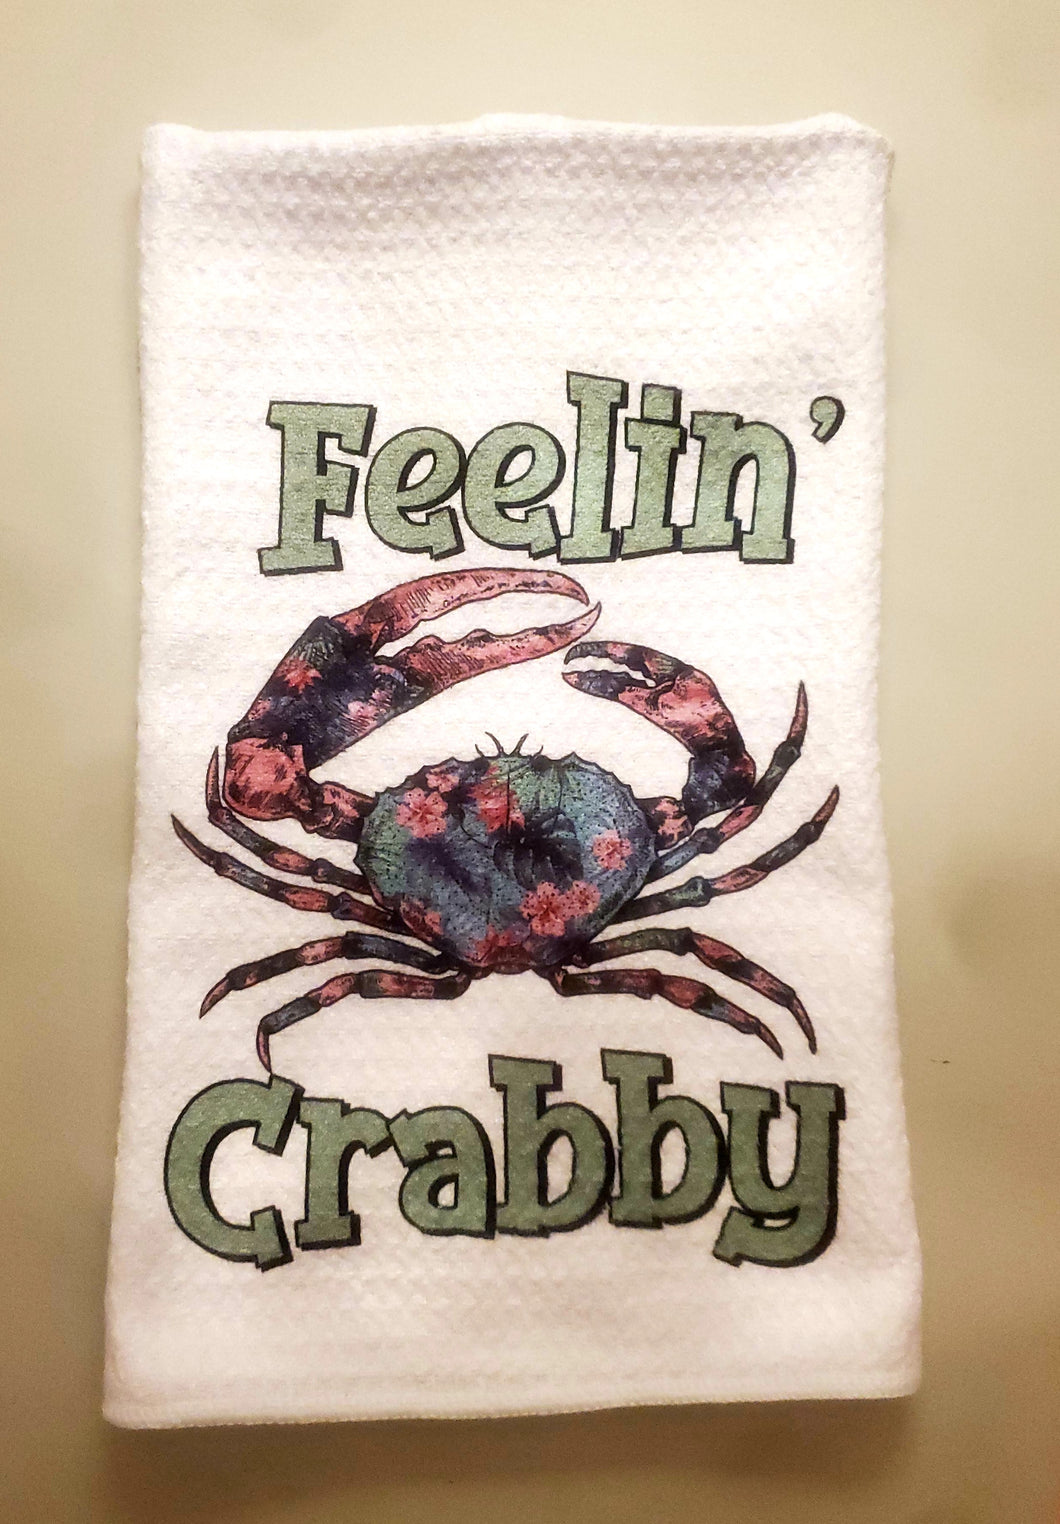 Feeling Crabby Towel